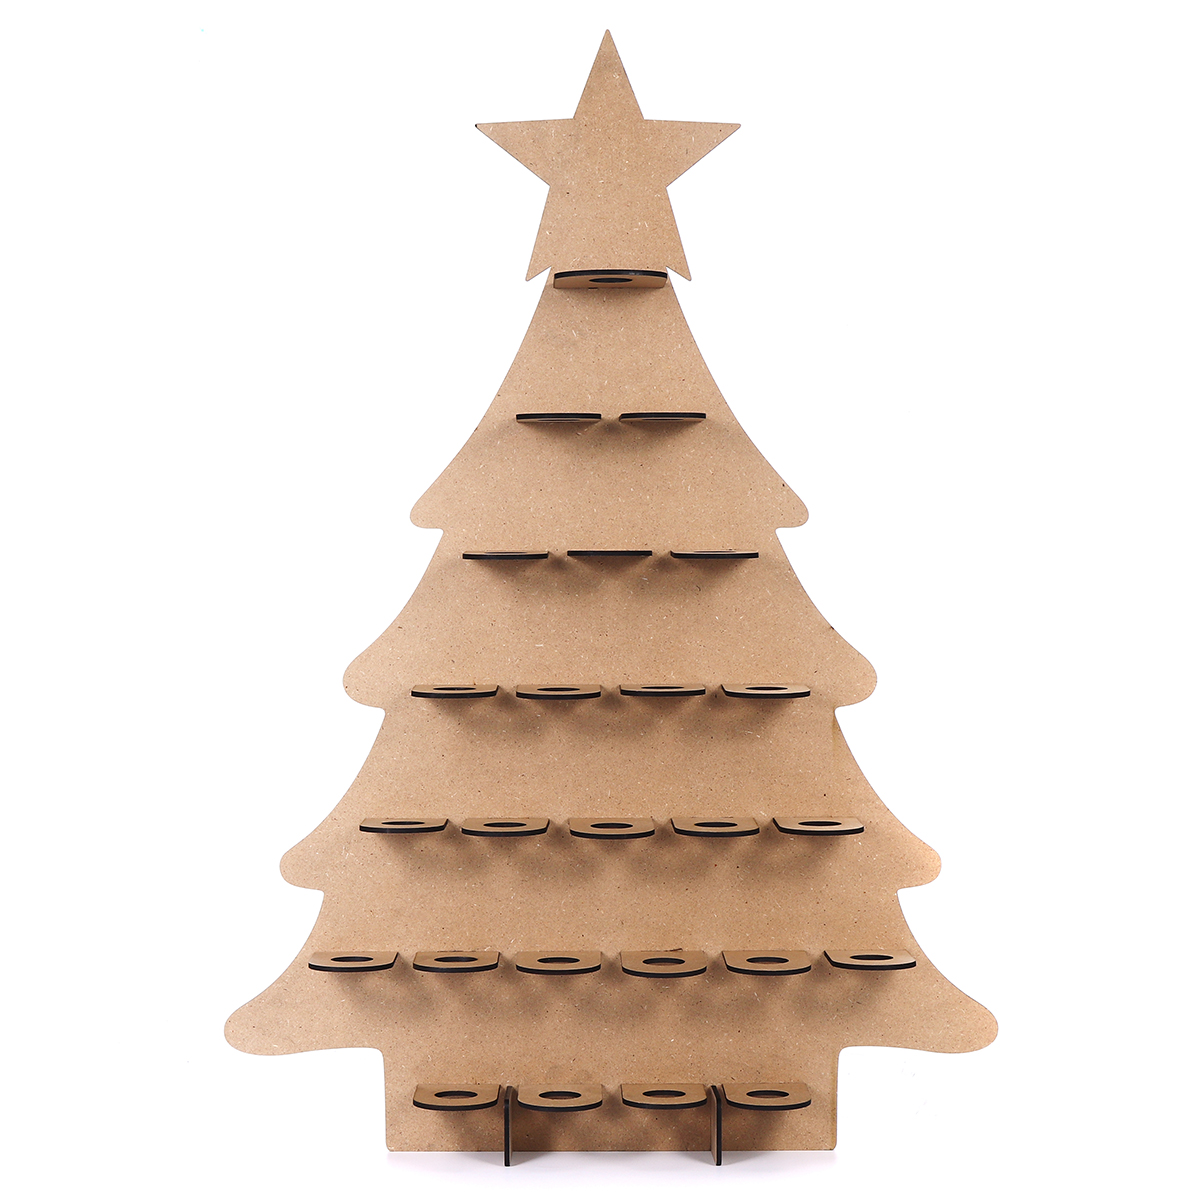 Wooden-Family-Advent-Calendar-Christmas-Tree-25-Chocolates-Stand-Rack-DIY-Decorations-1458960-4